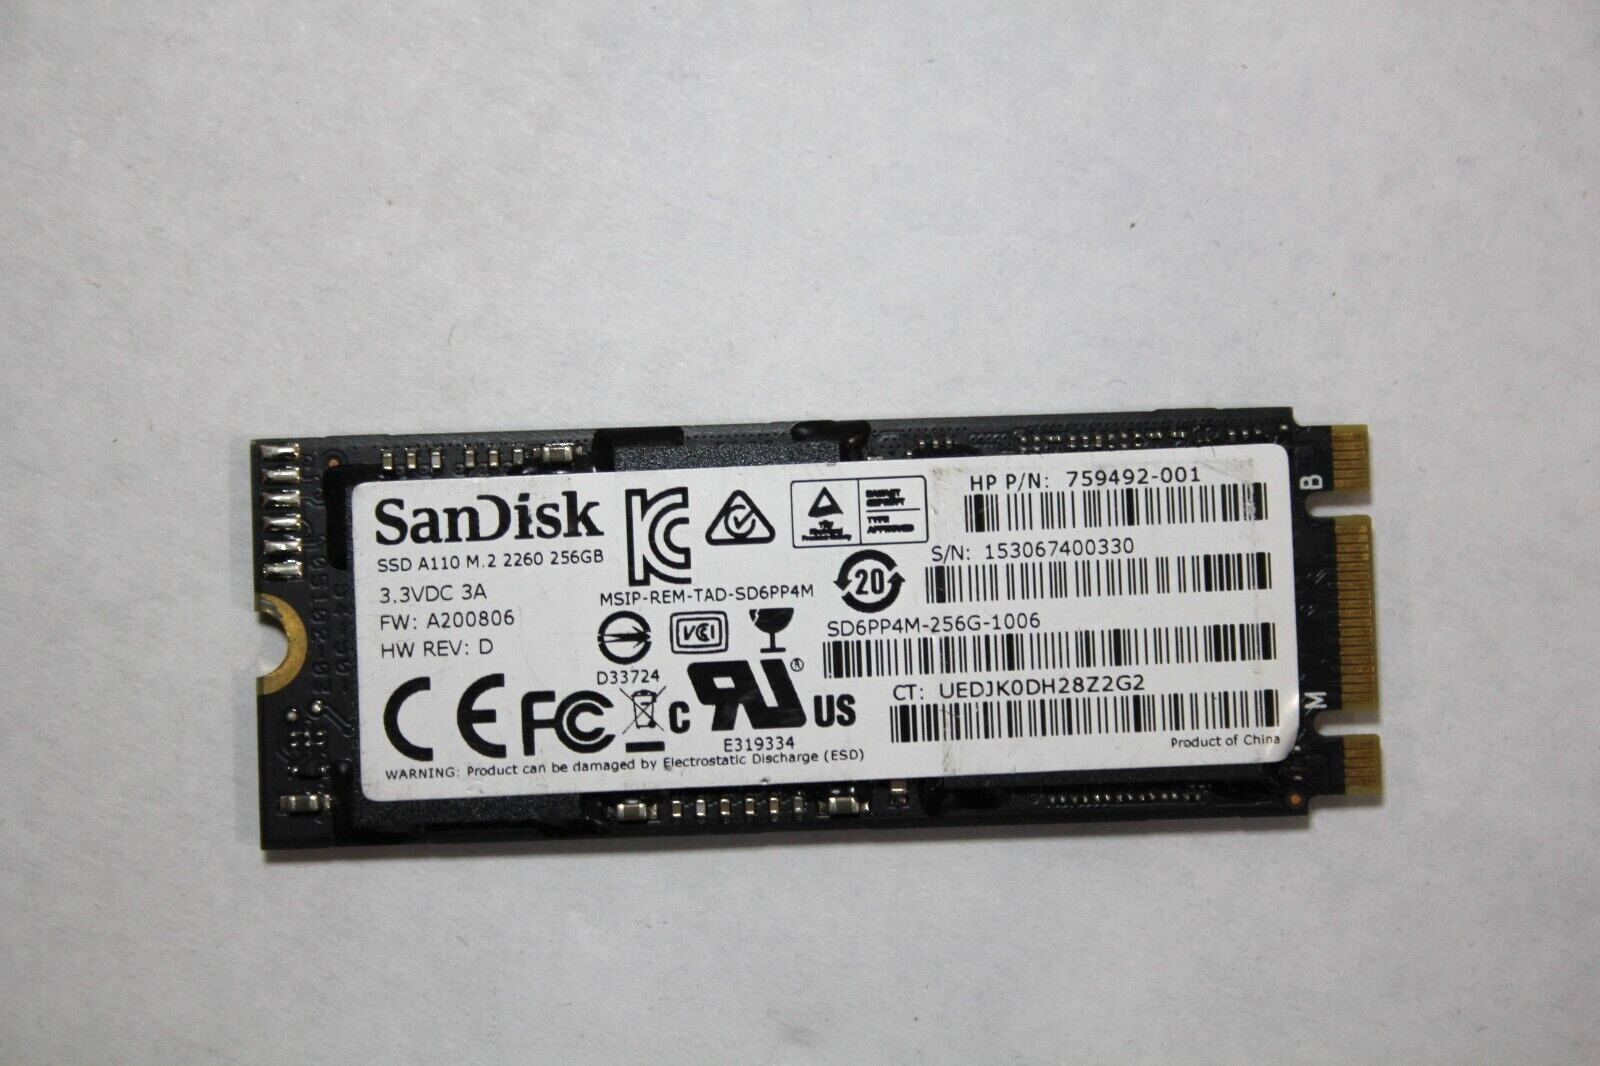 Sandisk A110 SSD SD6PP4M-256G-1006 M.2 2260 256GB PCIe NVMe for HP Zbook Laptop